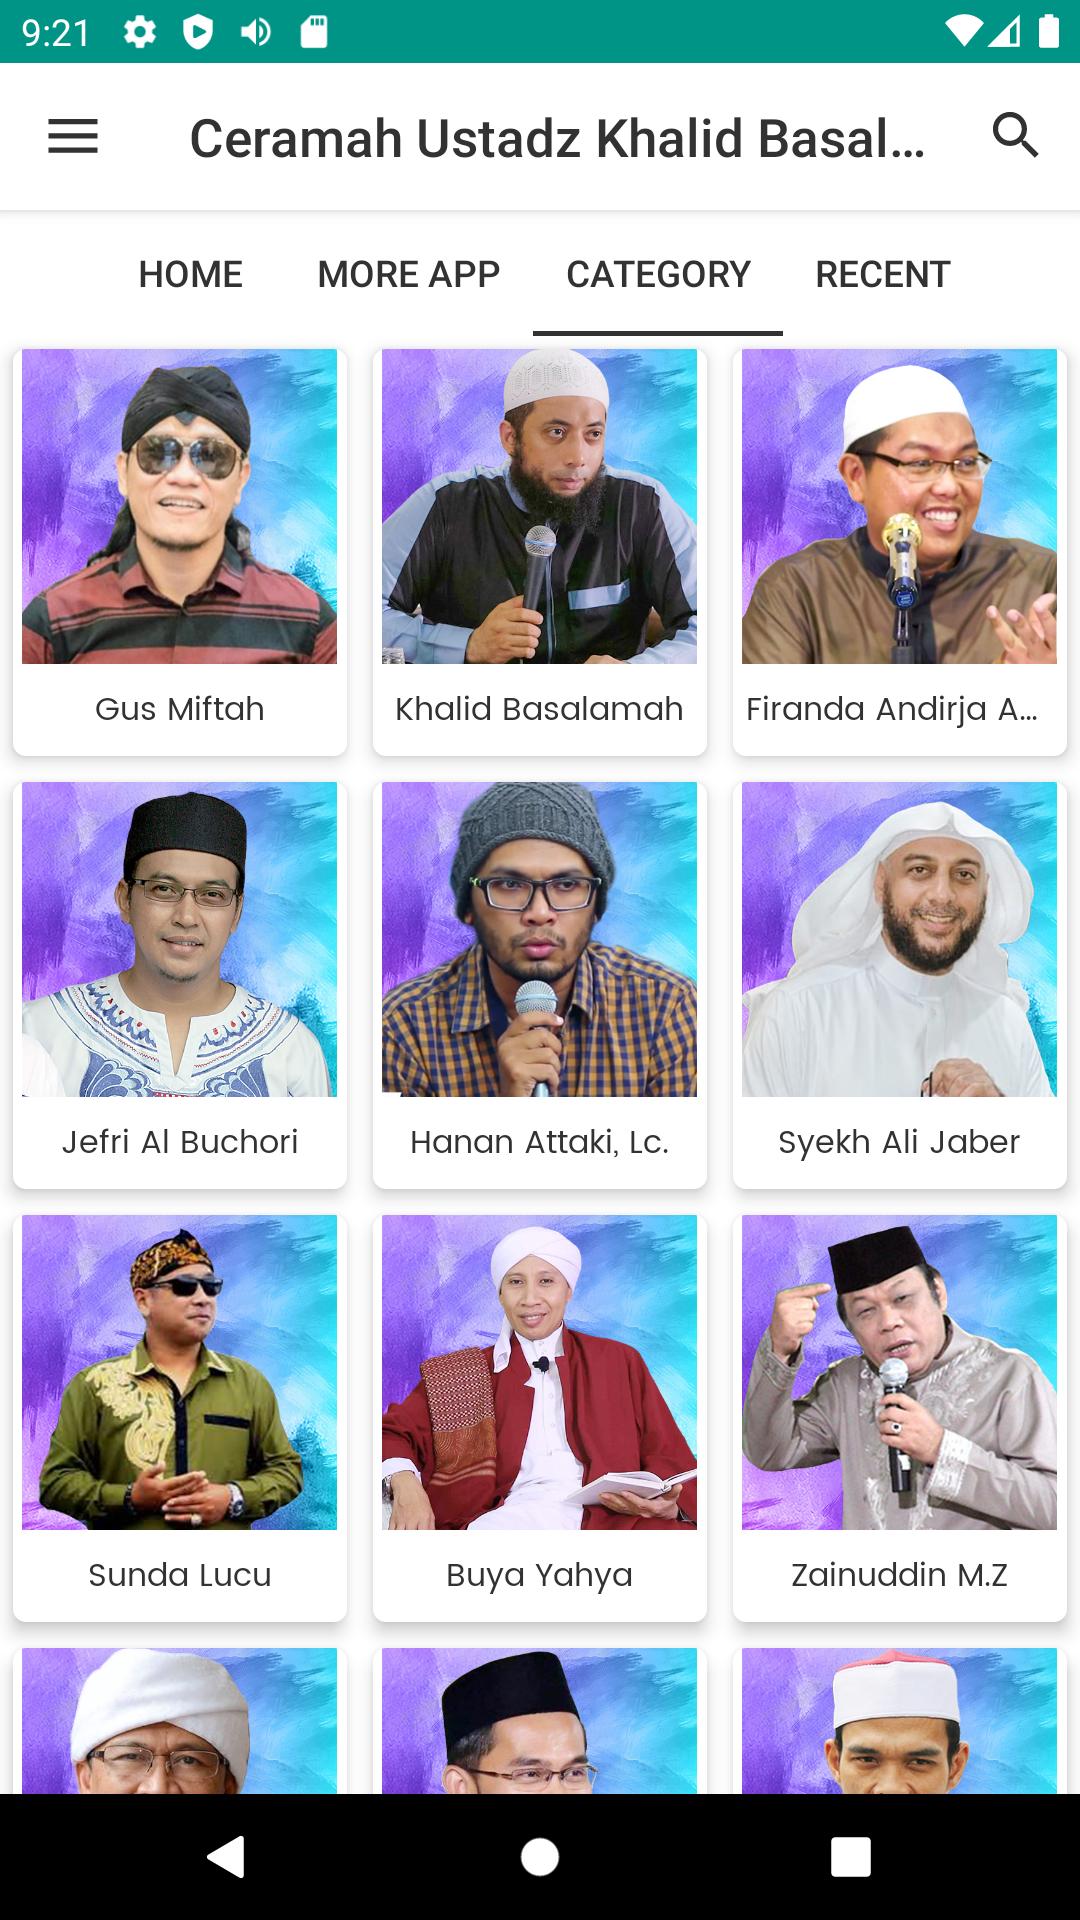 Ceramah Ustadz Khalid Basalamah 2021 For Android Apk Download